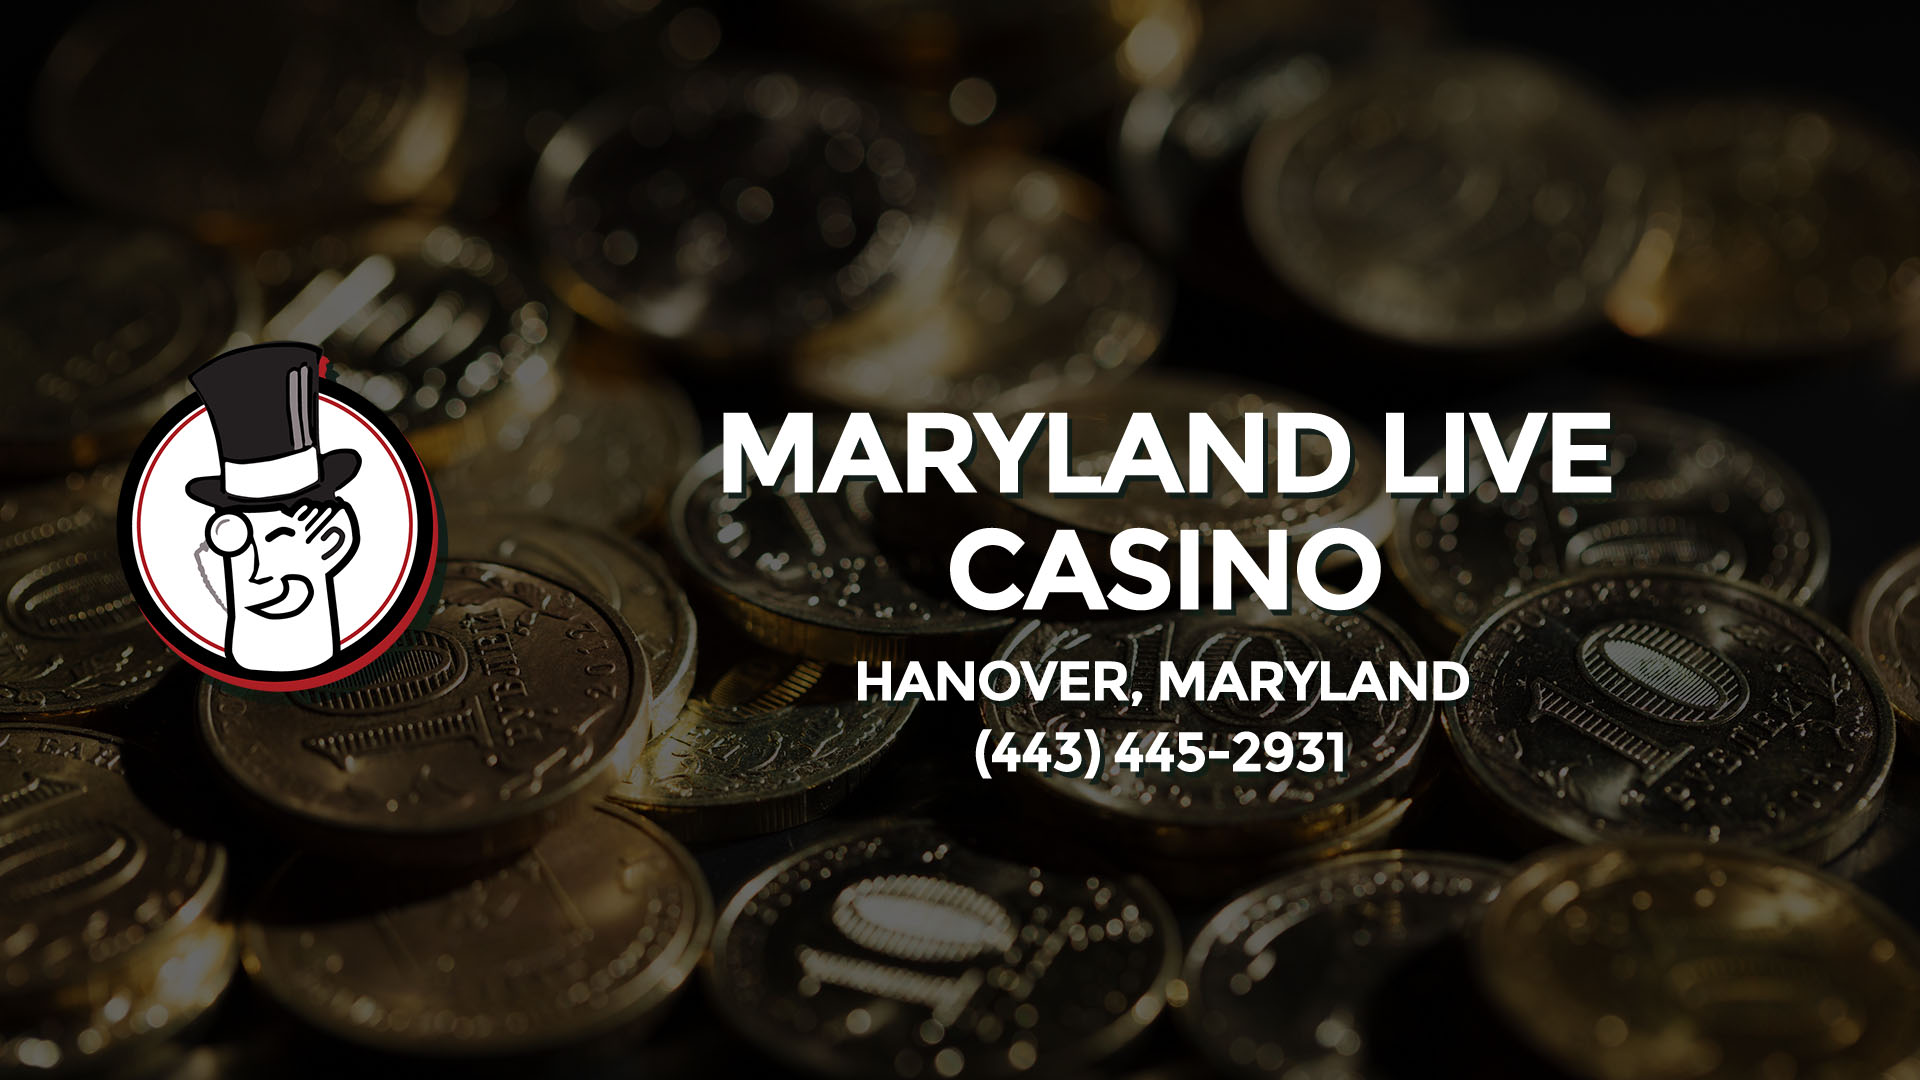 maryland live casino hanover md 21076